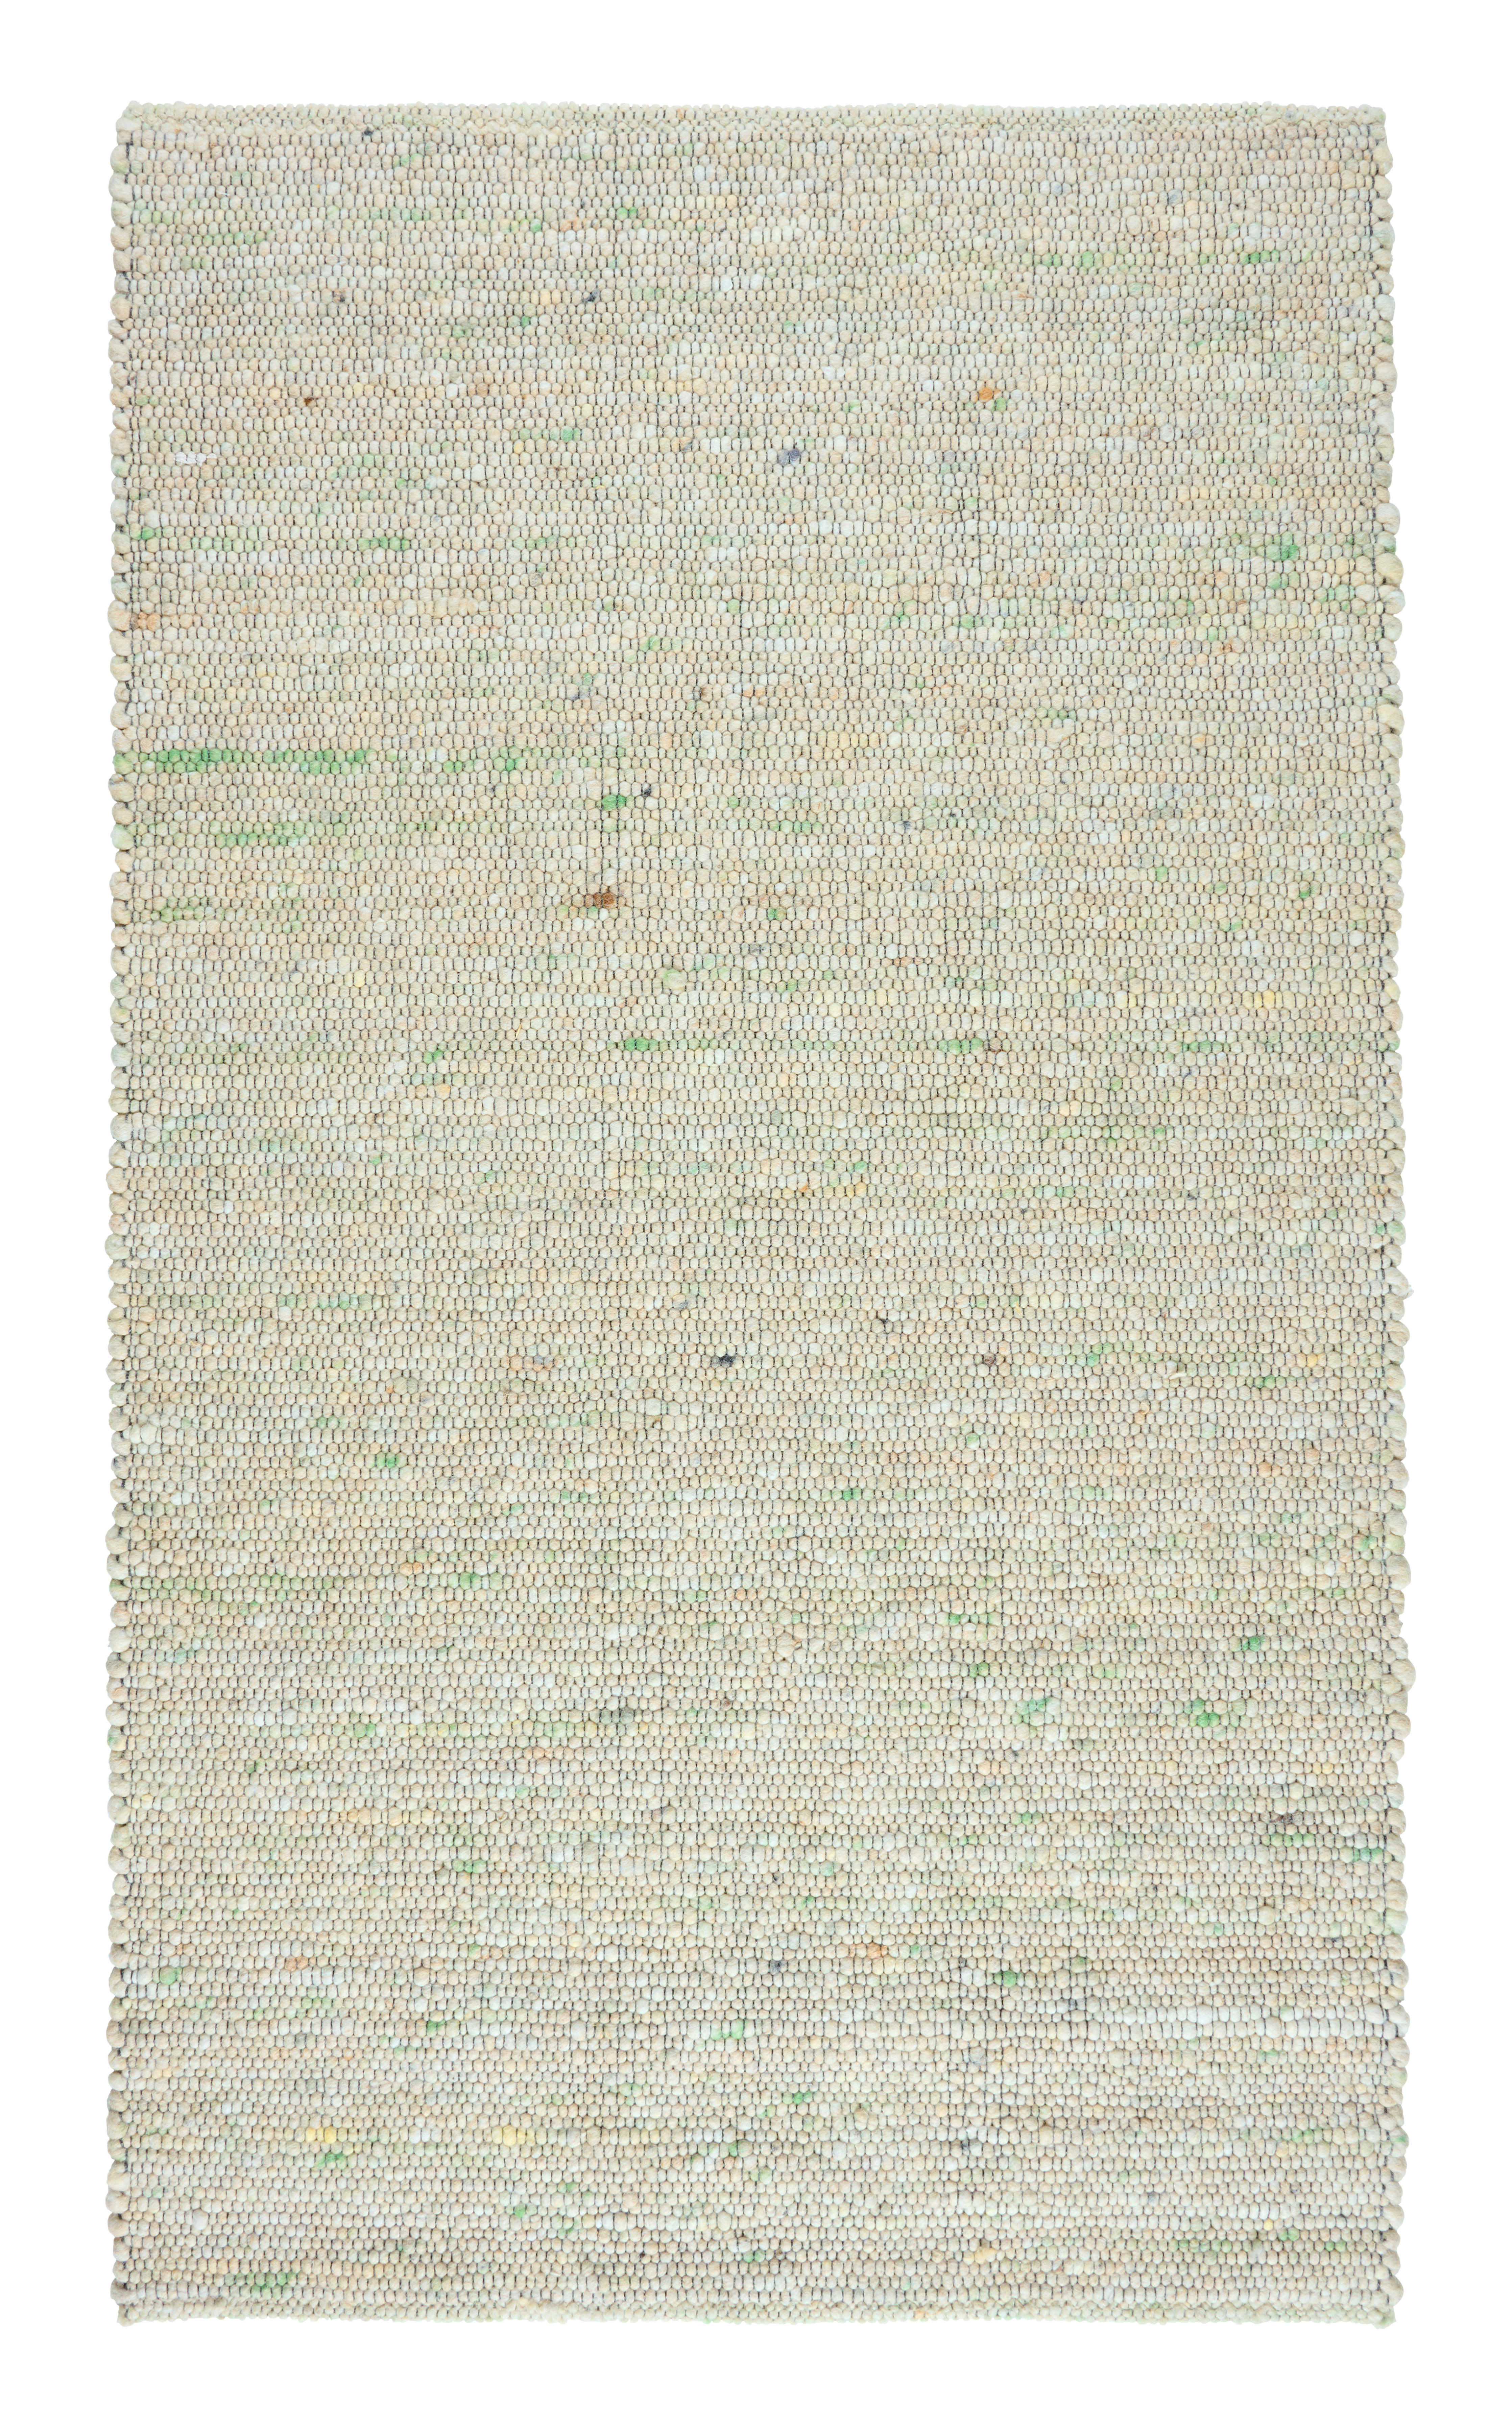 HANDWEBTEPPICH 60/110 cm Traunsee  - Naturfarben, Natur, Textil (60/110cm) - Linea Natura